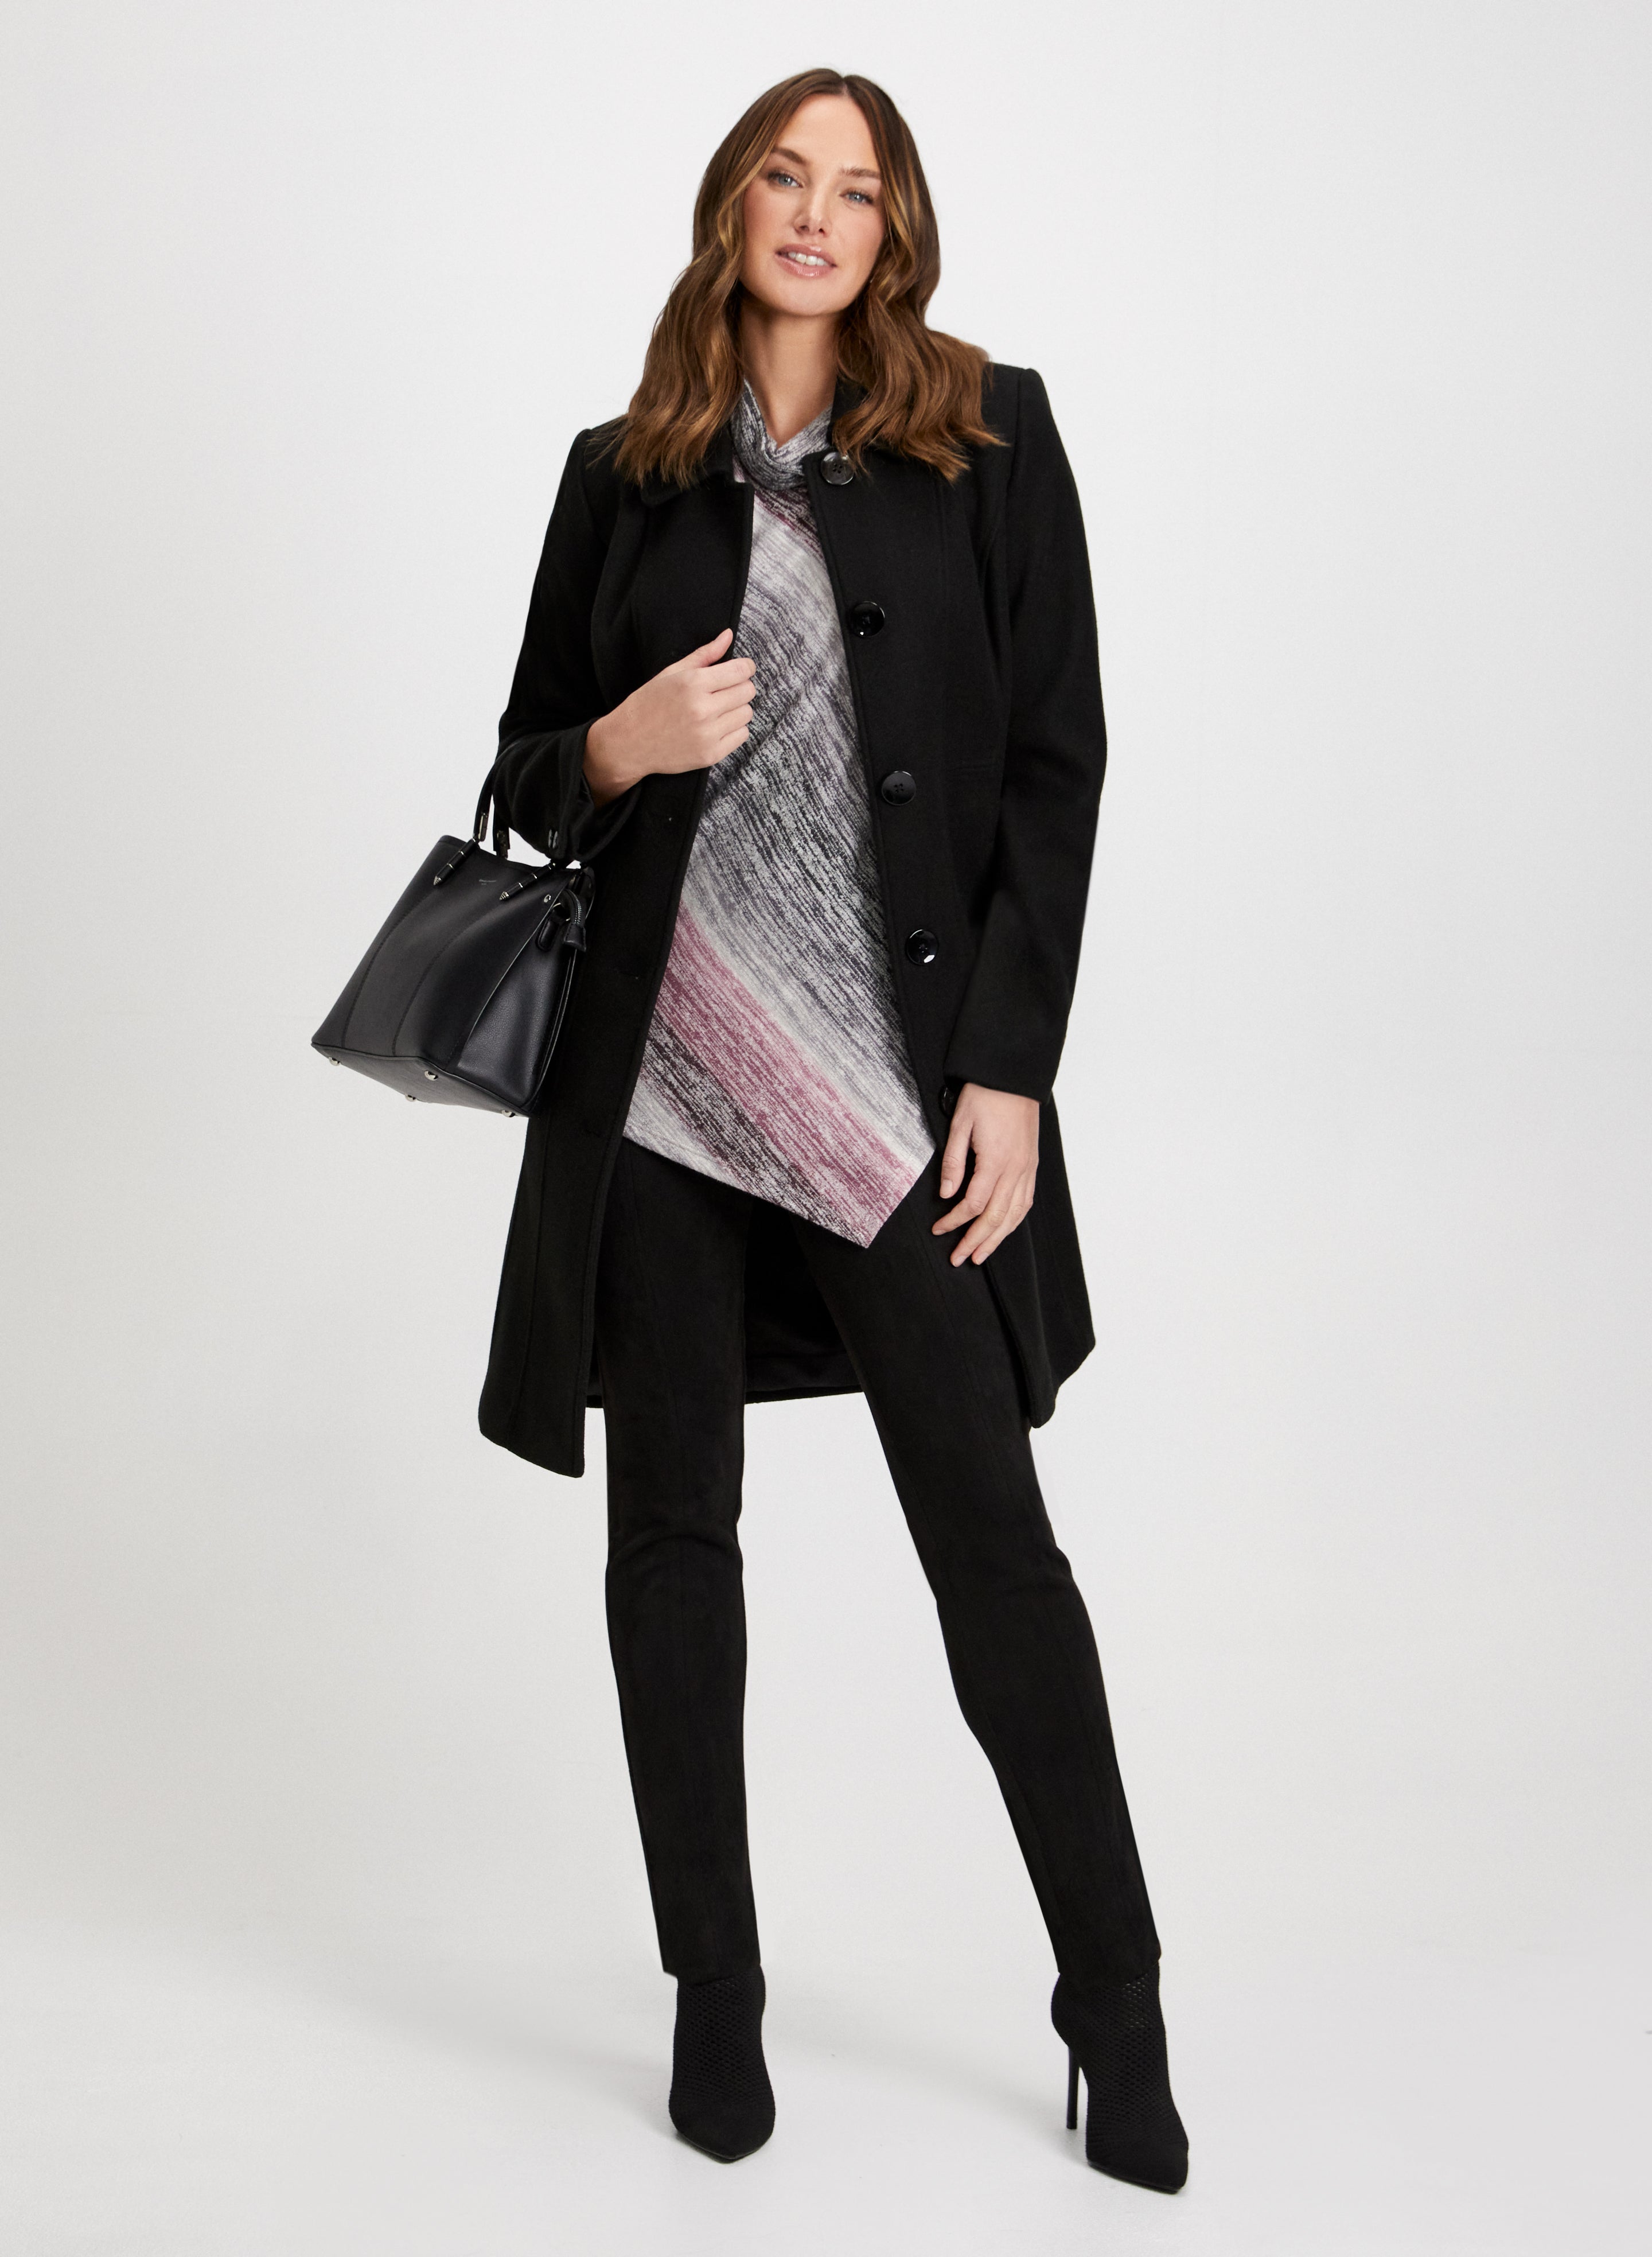 Wool Blend Coat, Asymmetric Stripe Print Top & Leggings